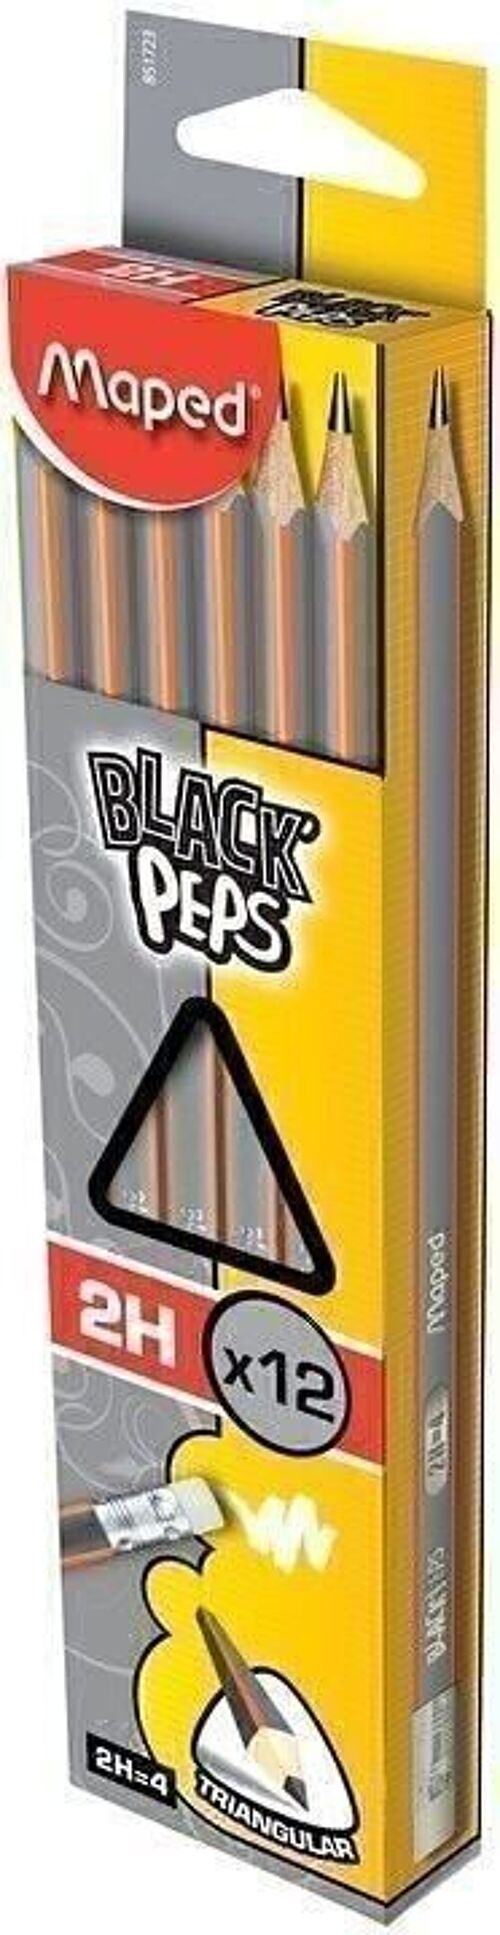 Crayons Graphite embout gomme BLACK'PEPS 2H en boîte carton